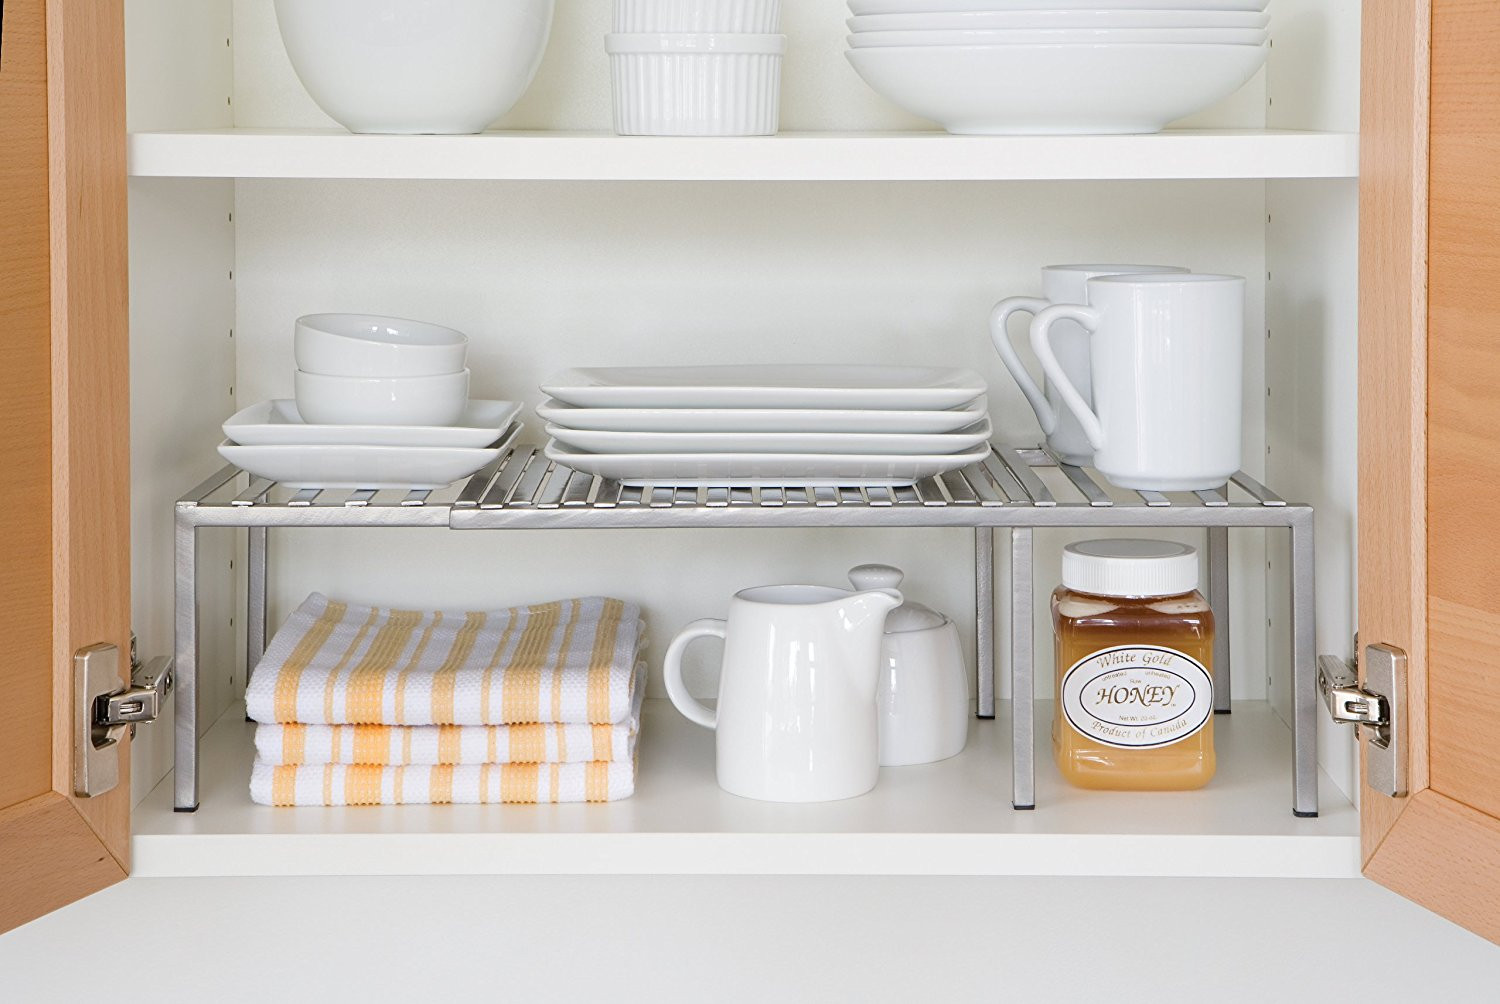 Kitchen Cabinet Shelves Organizer
 21 Brilliant Ways To Organize Kitchen Cabinets You ll Kick